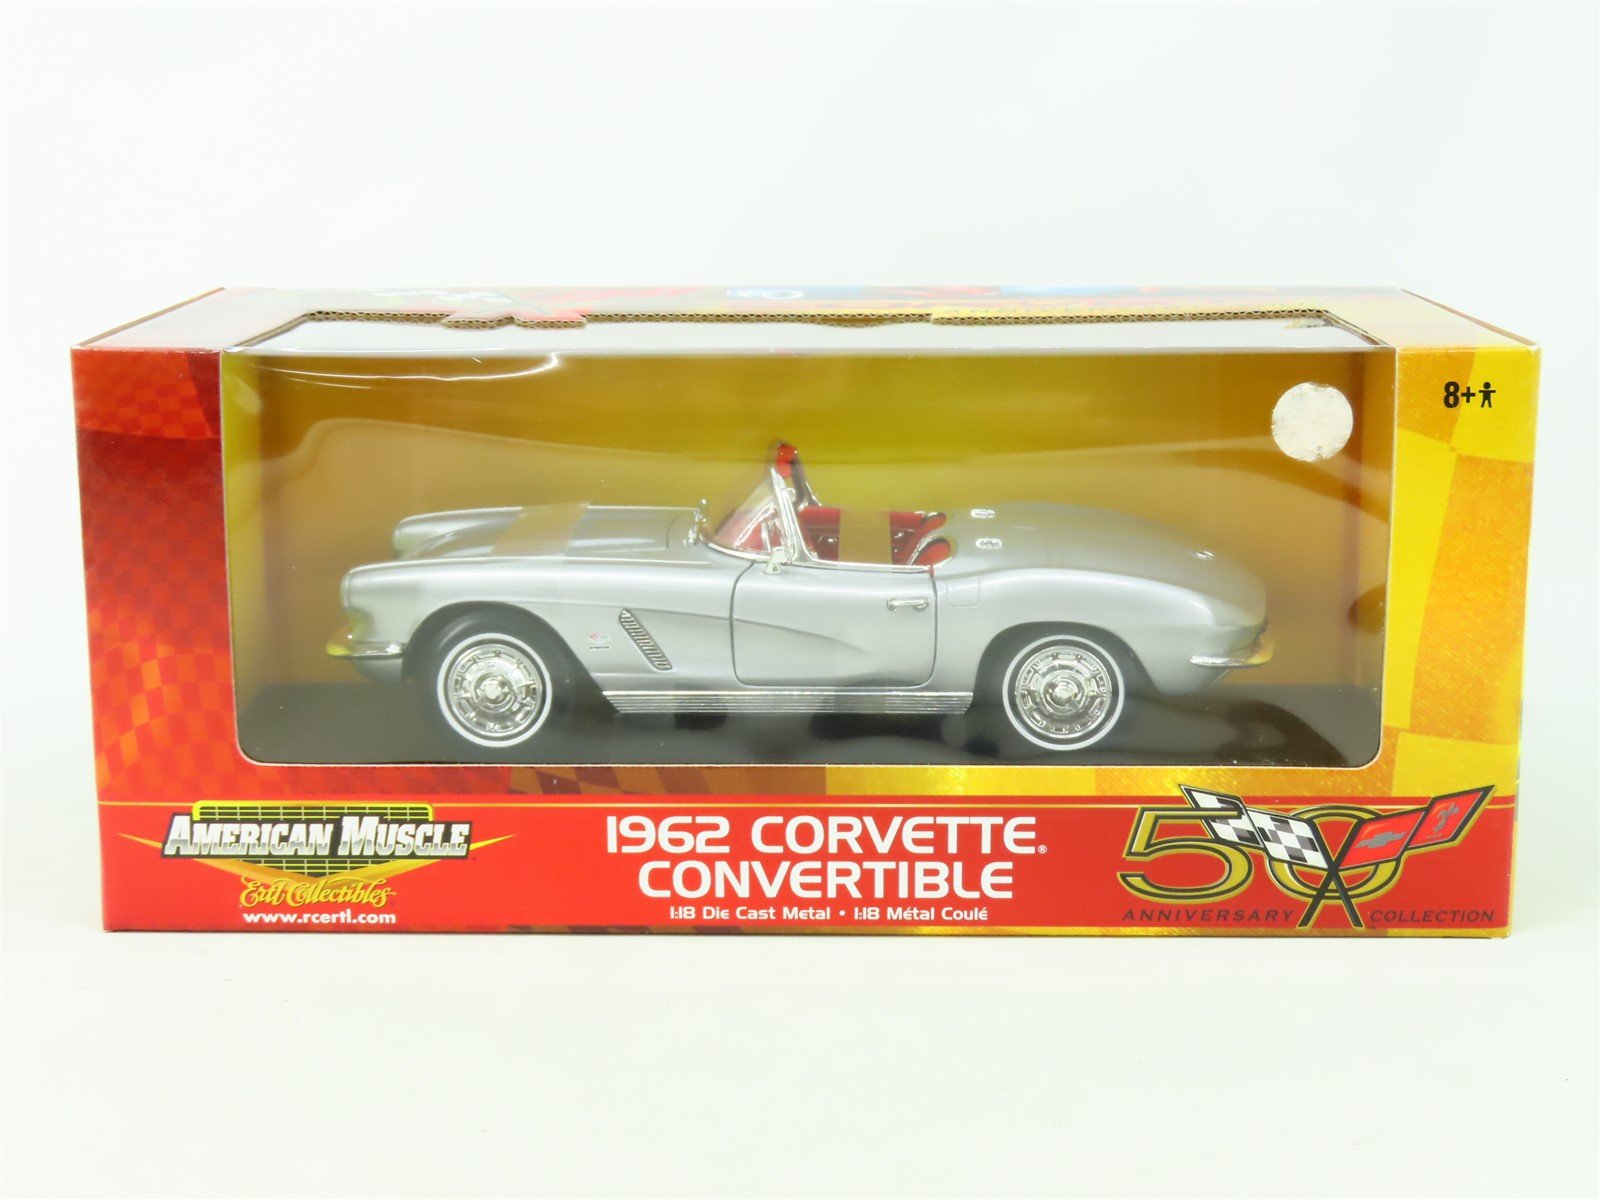 1:18 Scale RC Ertl American Muscle #36833 Die-Cast 1962 Corvette Convertible